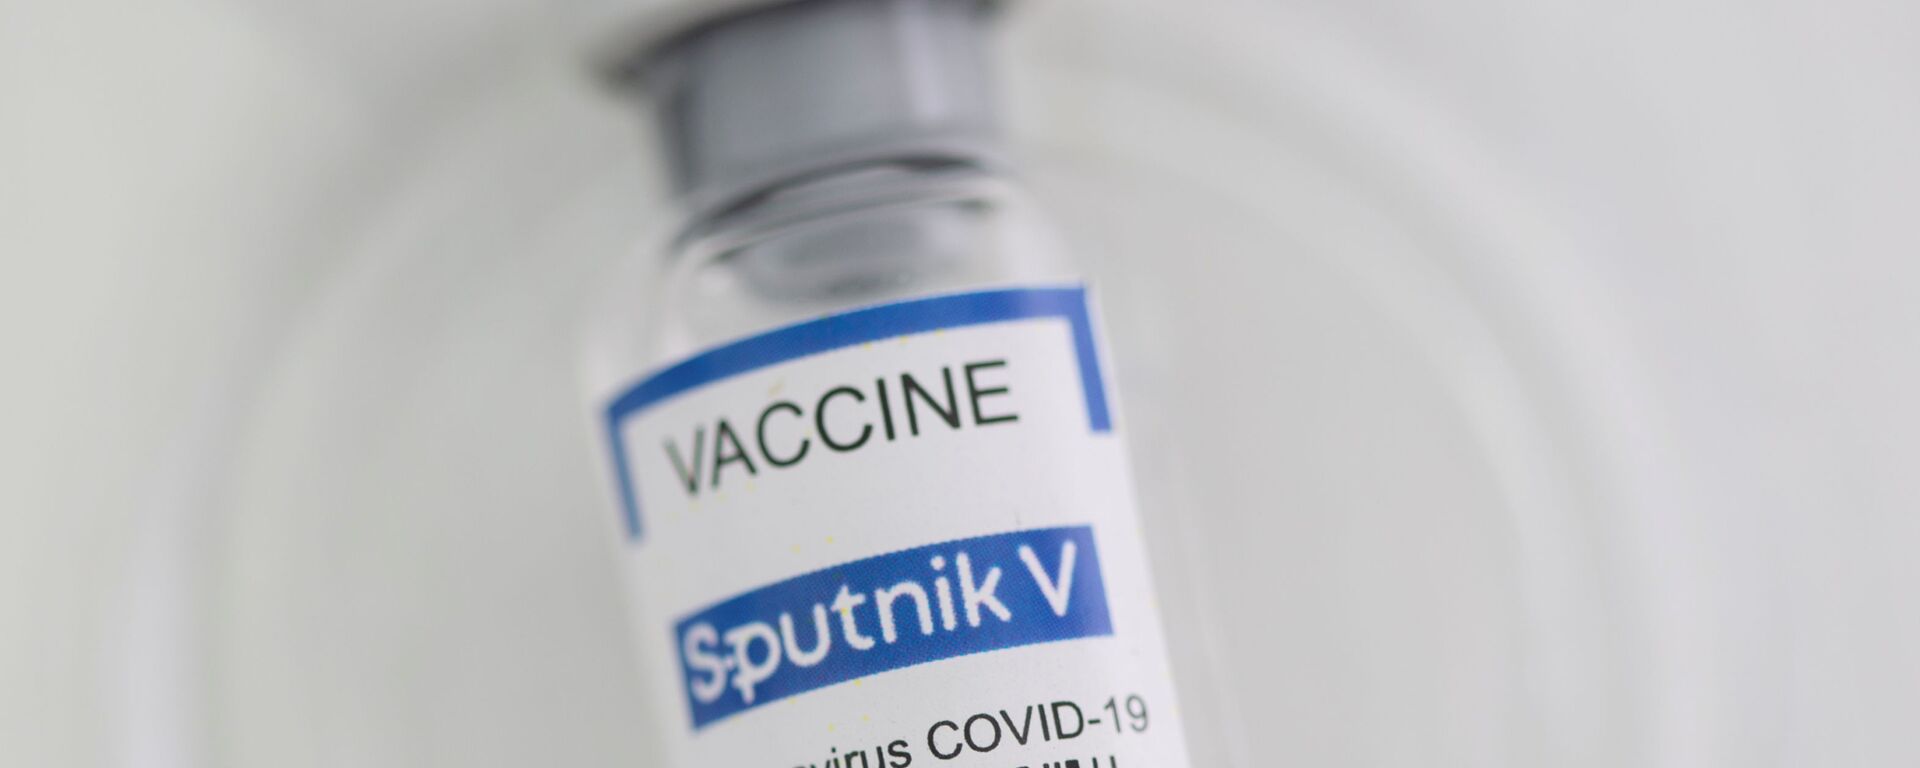 A vial labelled Sputnik V coronavirus disease (COVID-19) vaccine is seen in this illustration picture taken on 2 May 2021. - Sputnik International, 1920, 27.10.2021